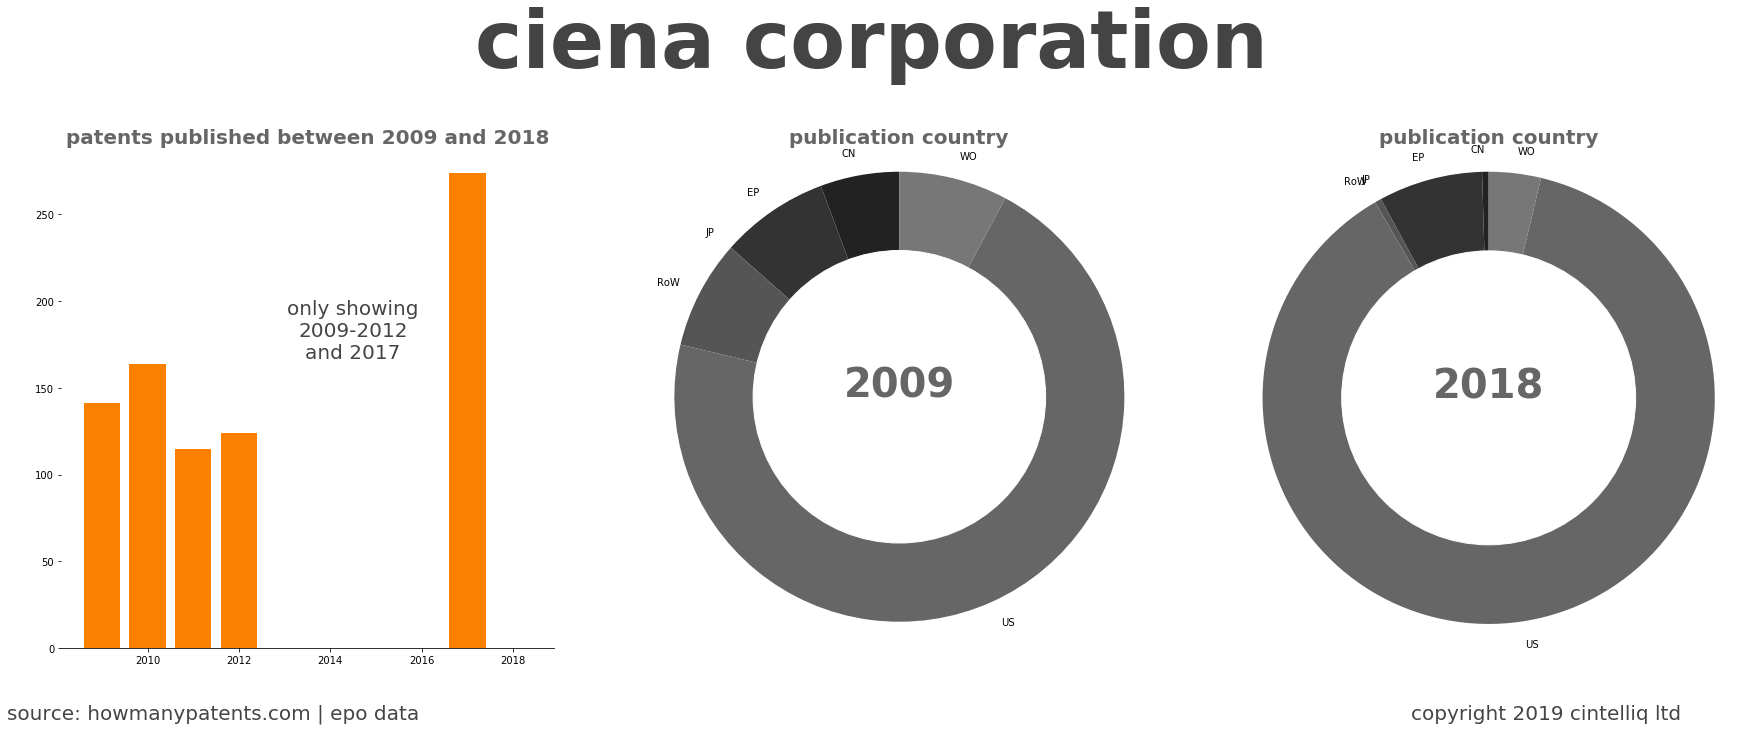 summary of patents for Ciena Corporation